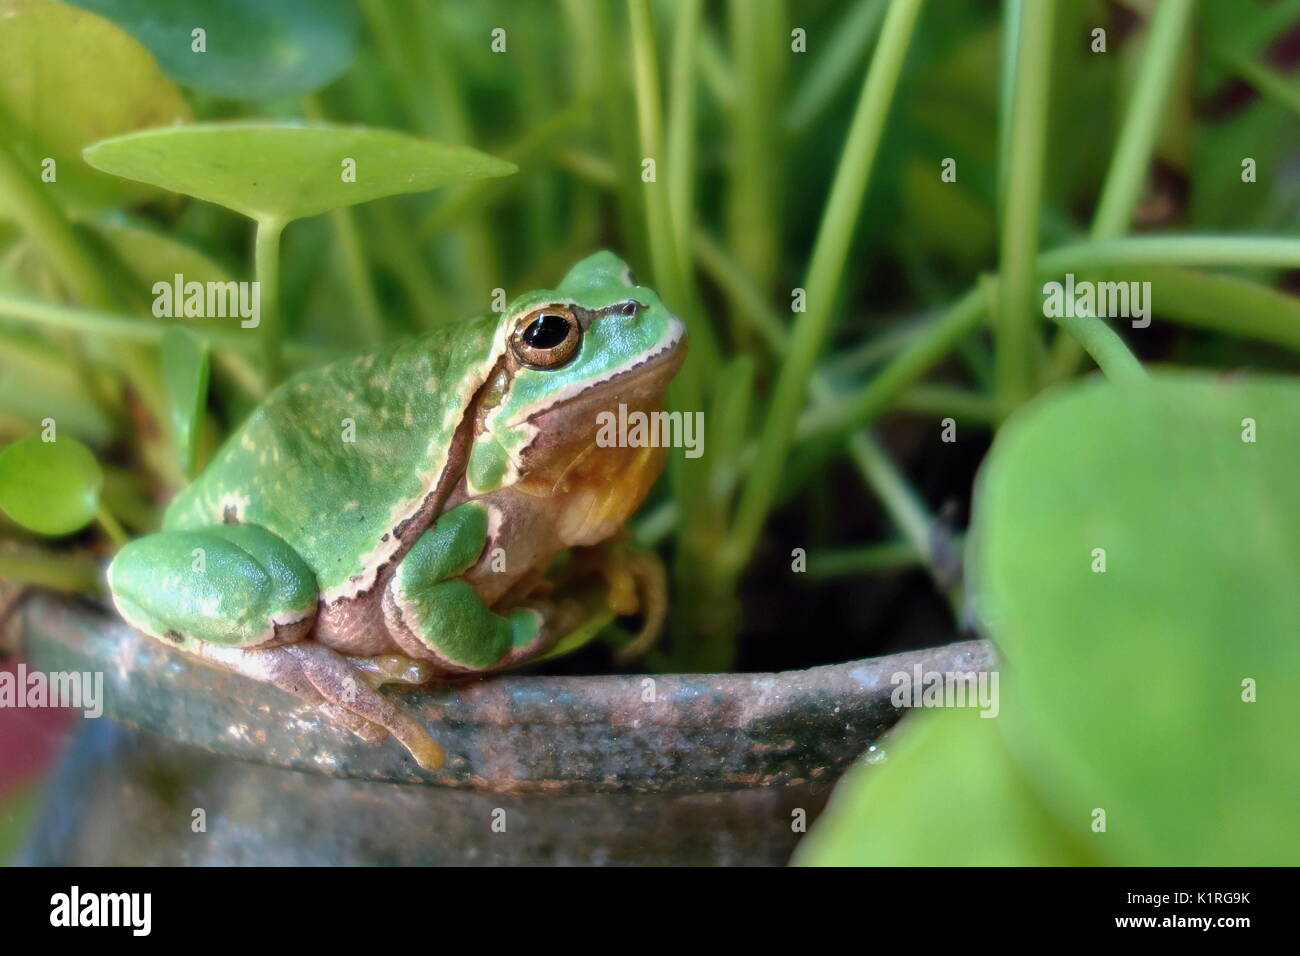 Nice green amphibian European tree frog, Hyla arborea, sitting on grass habitat. Stock Photo